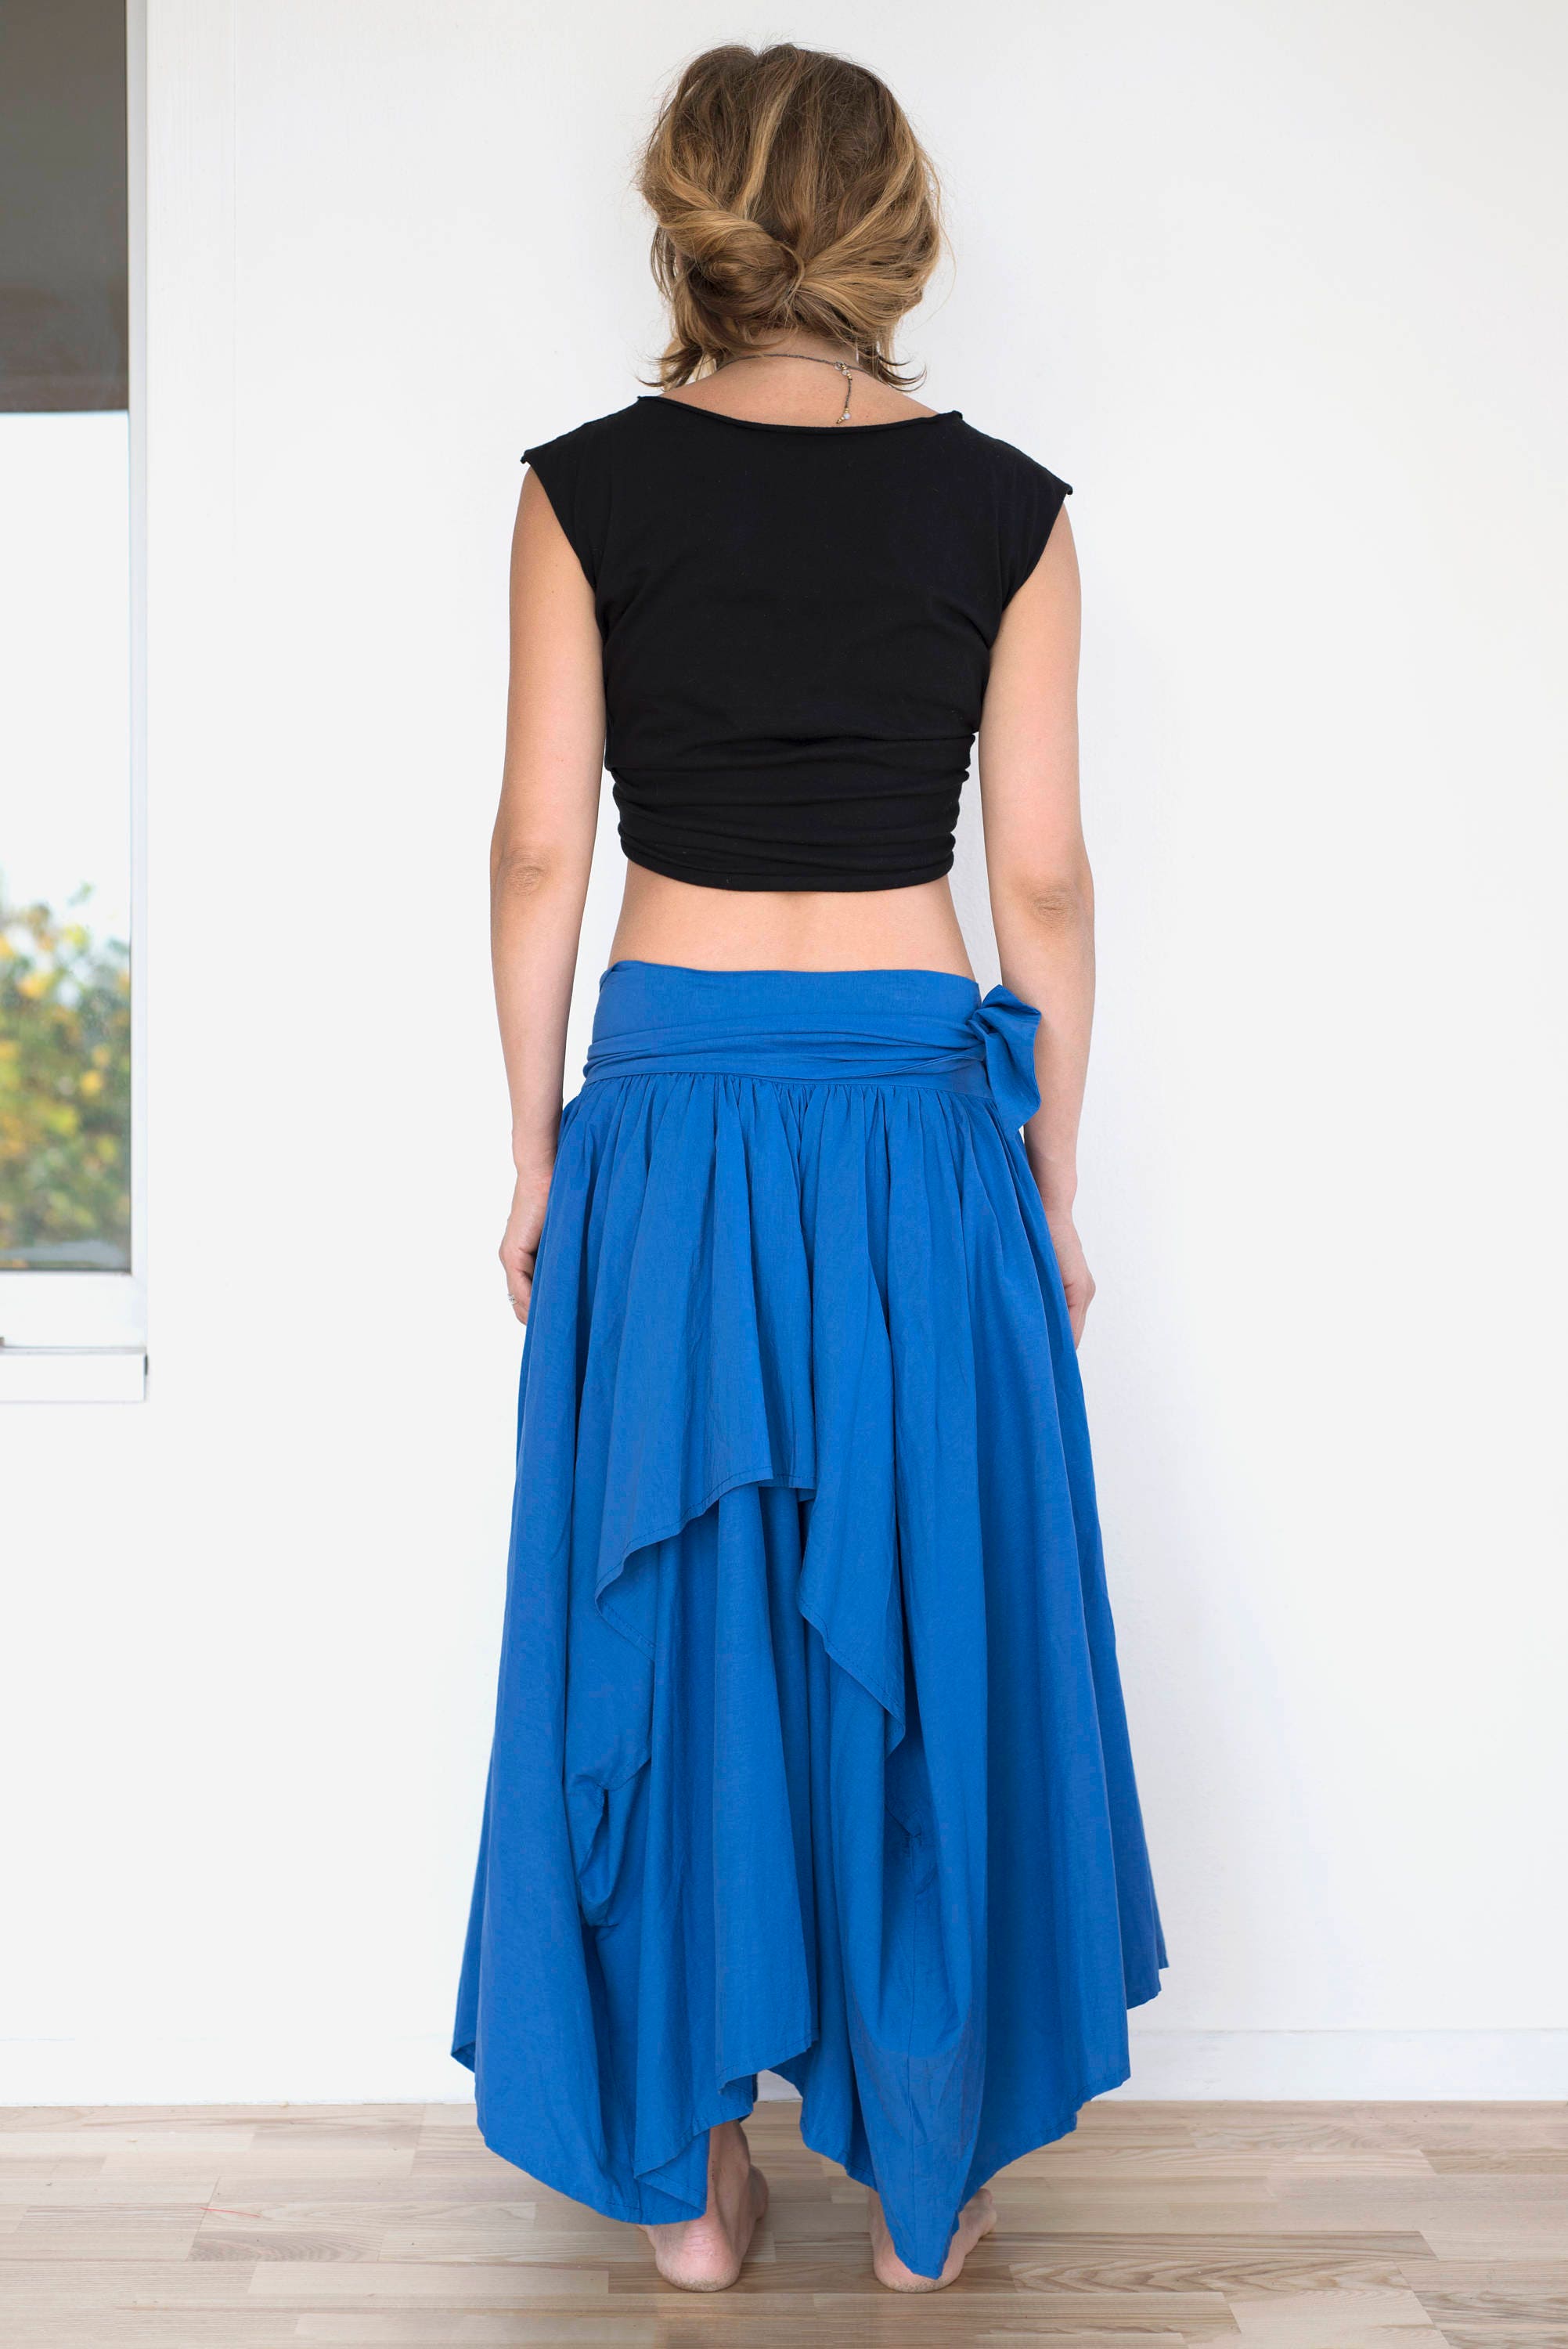 Blue Cotton Skirt Layered Skirt Ruffle Gypsy & Hippie | Etsy